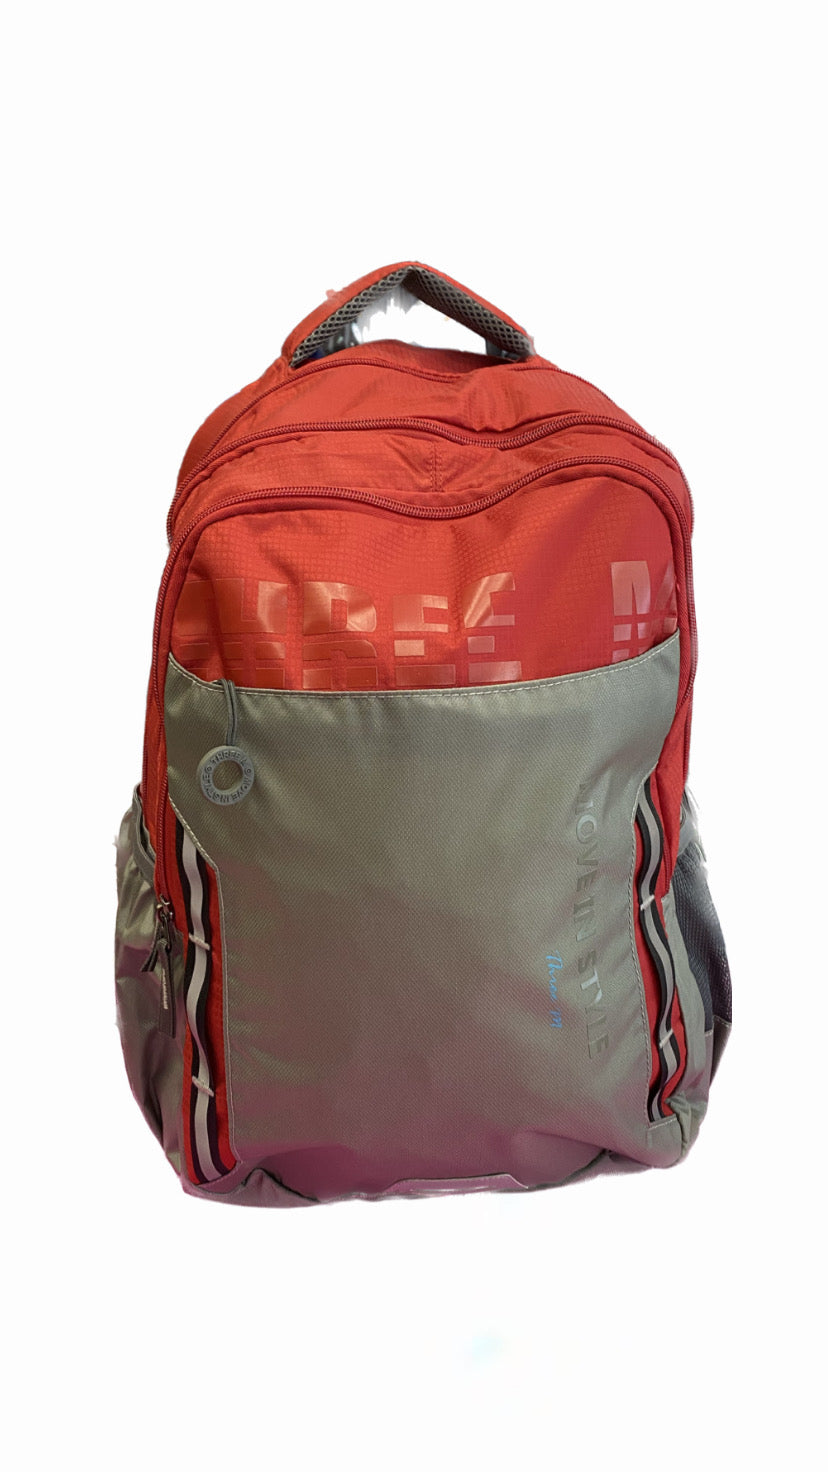 Smart Three M Waterproof School Bag Size 19